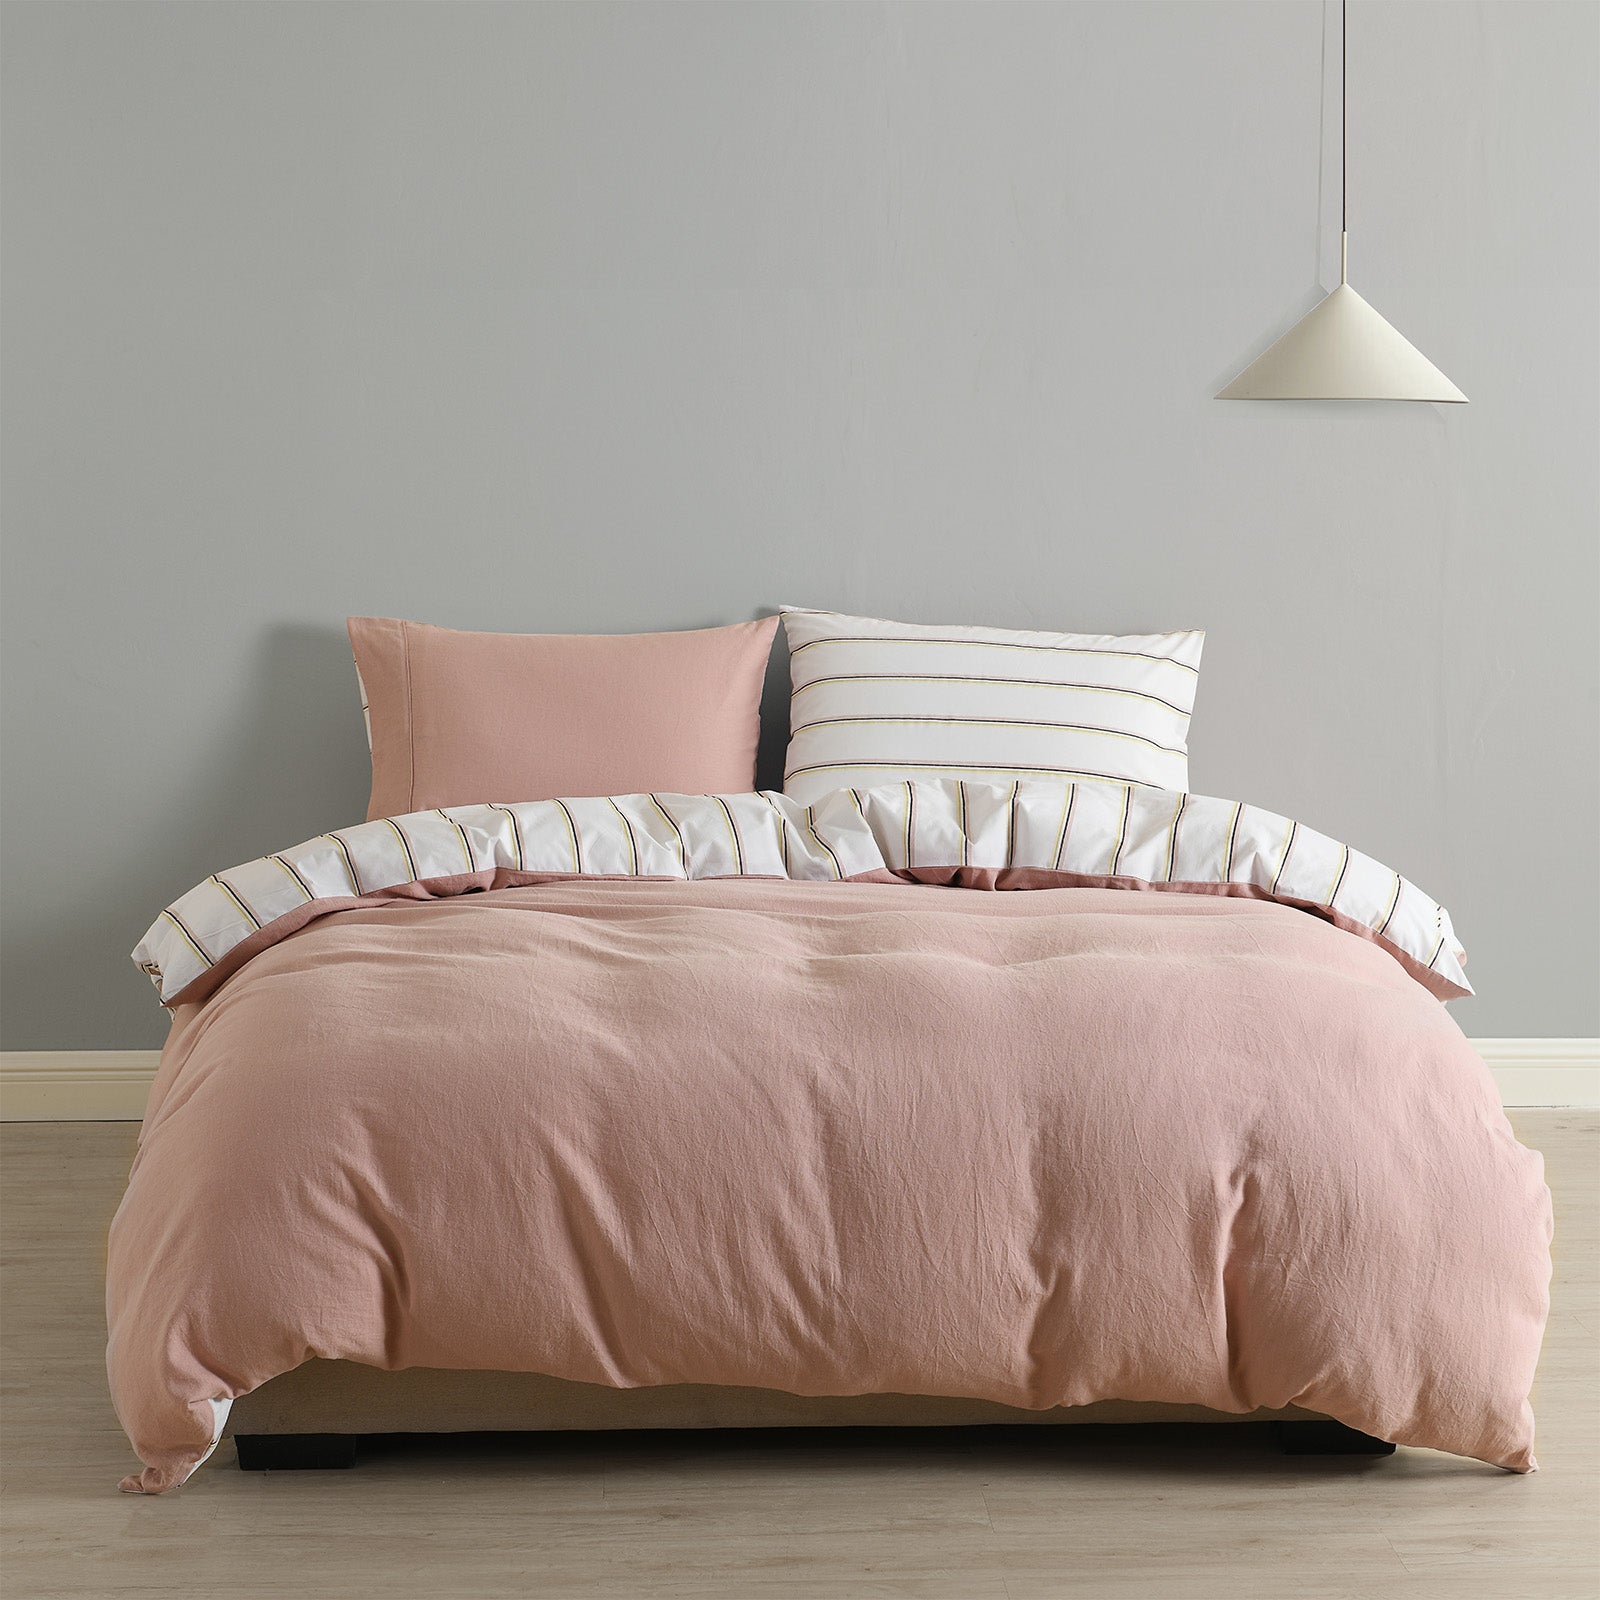 Hemp Braid Cotton Blend Quilt Cover Set Reverse Stripe Bedding - Queen - Dusk Pink